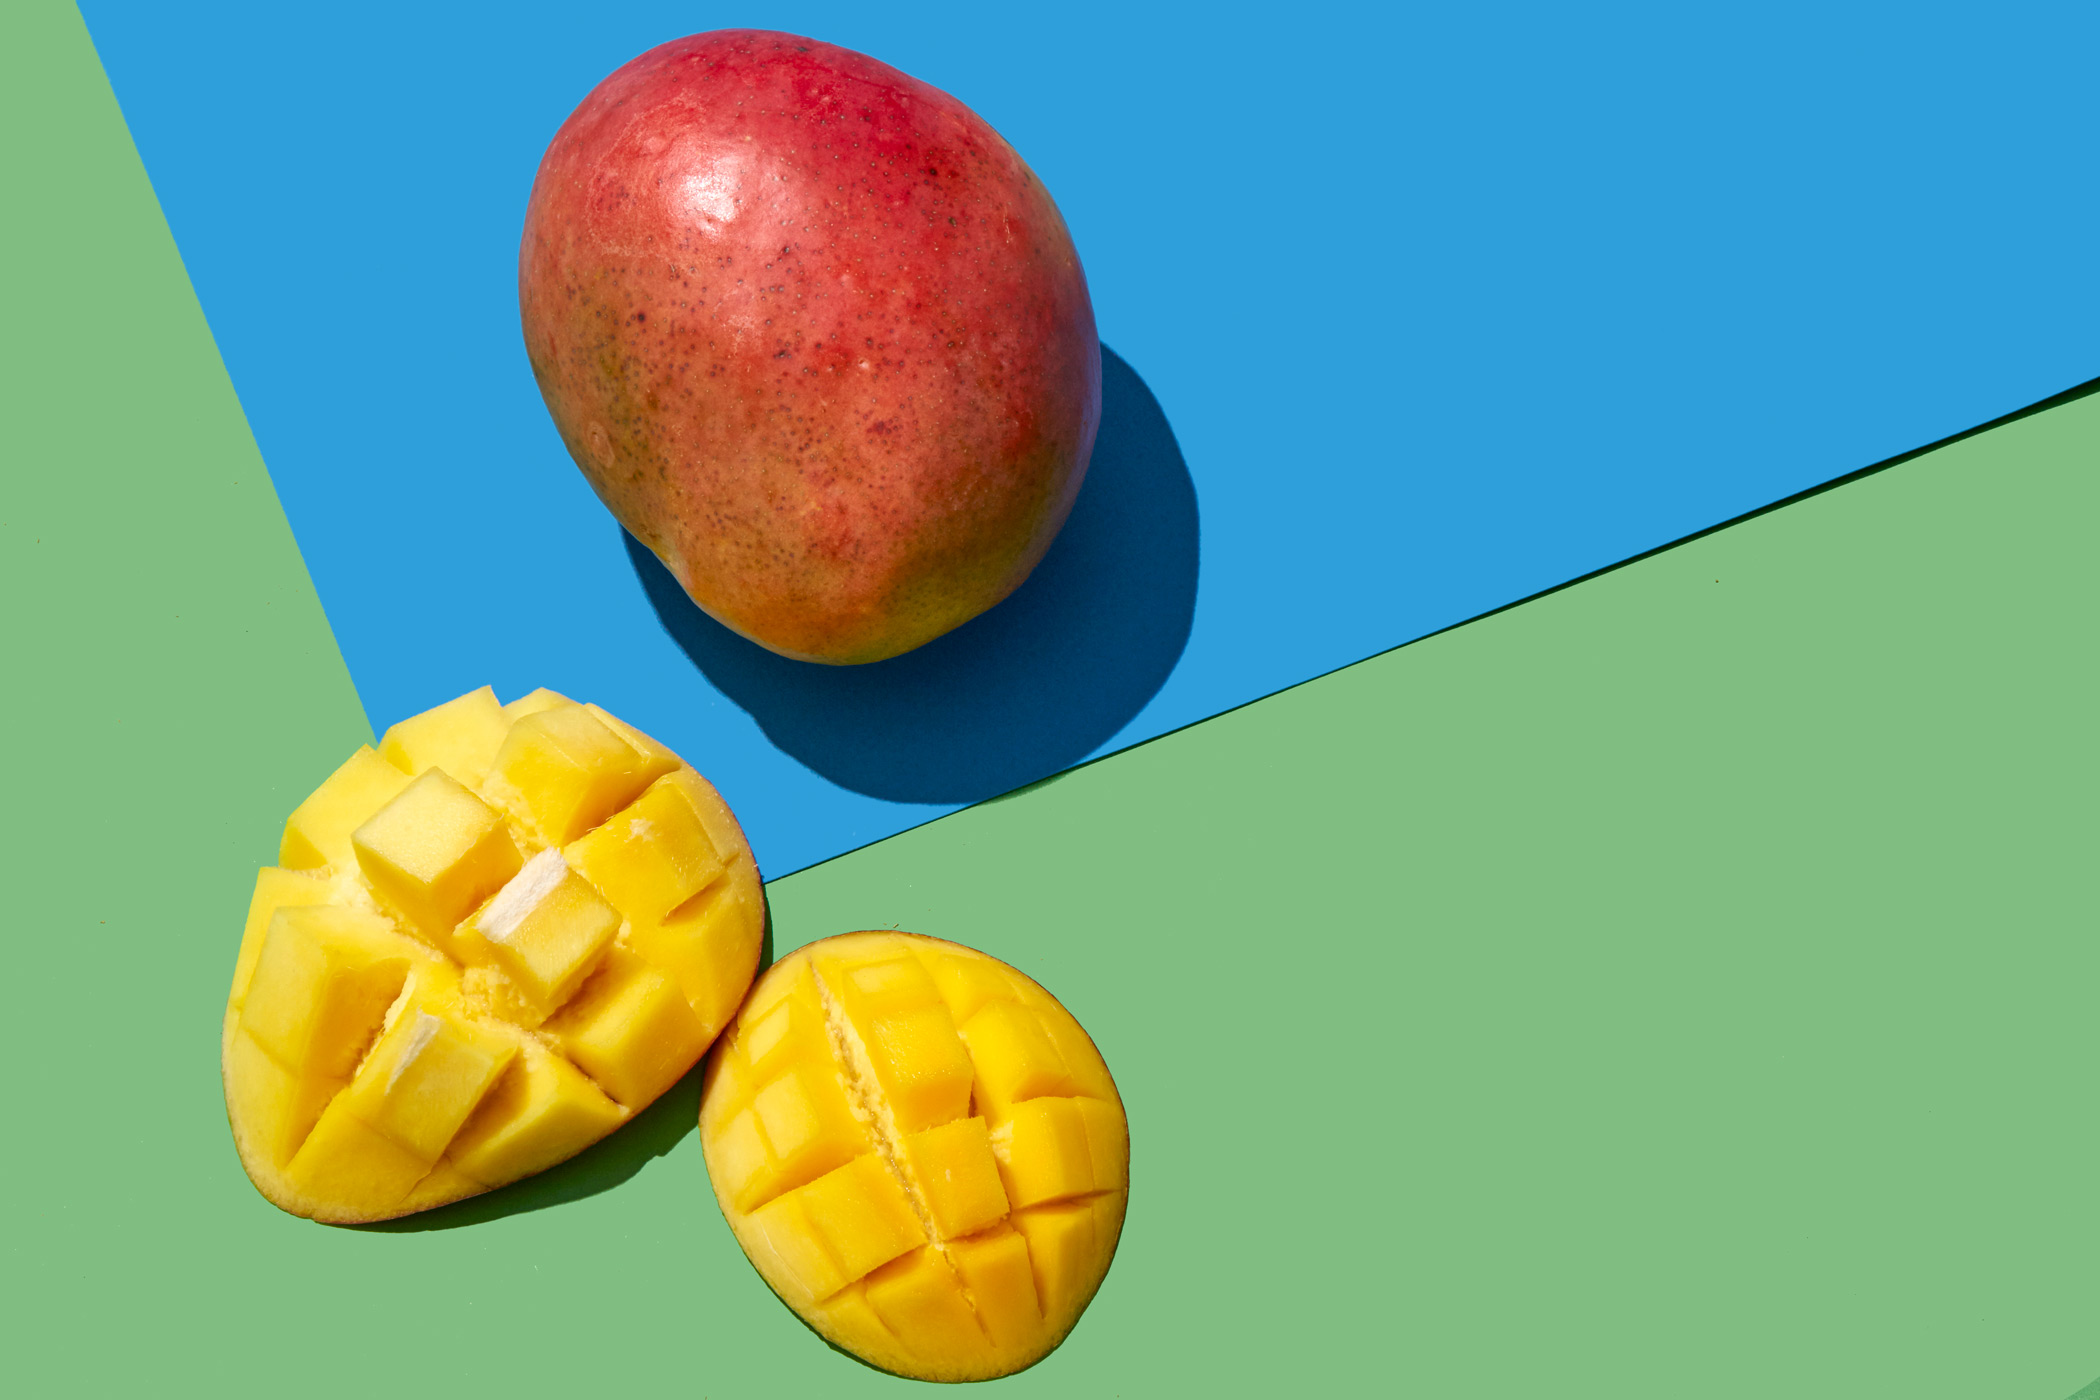 healthiest foods, health food, diet, nutrition, time.com stock, mango, fruit